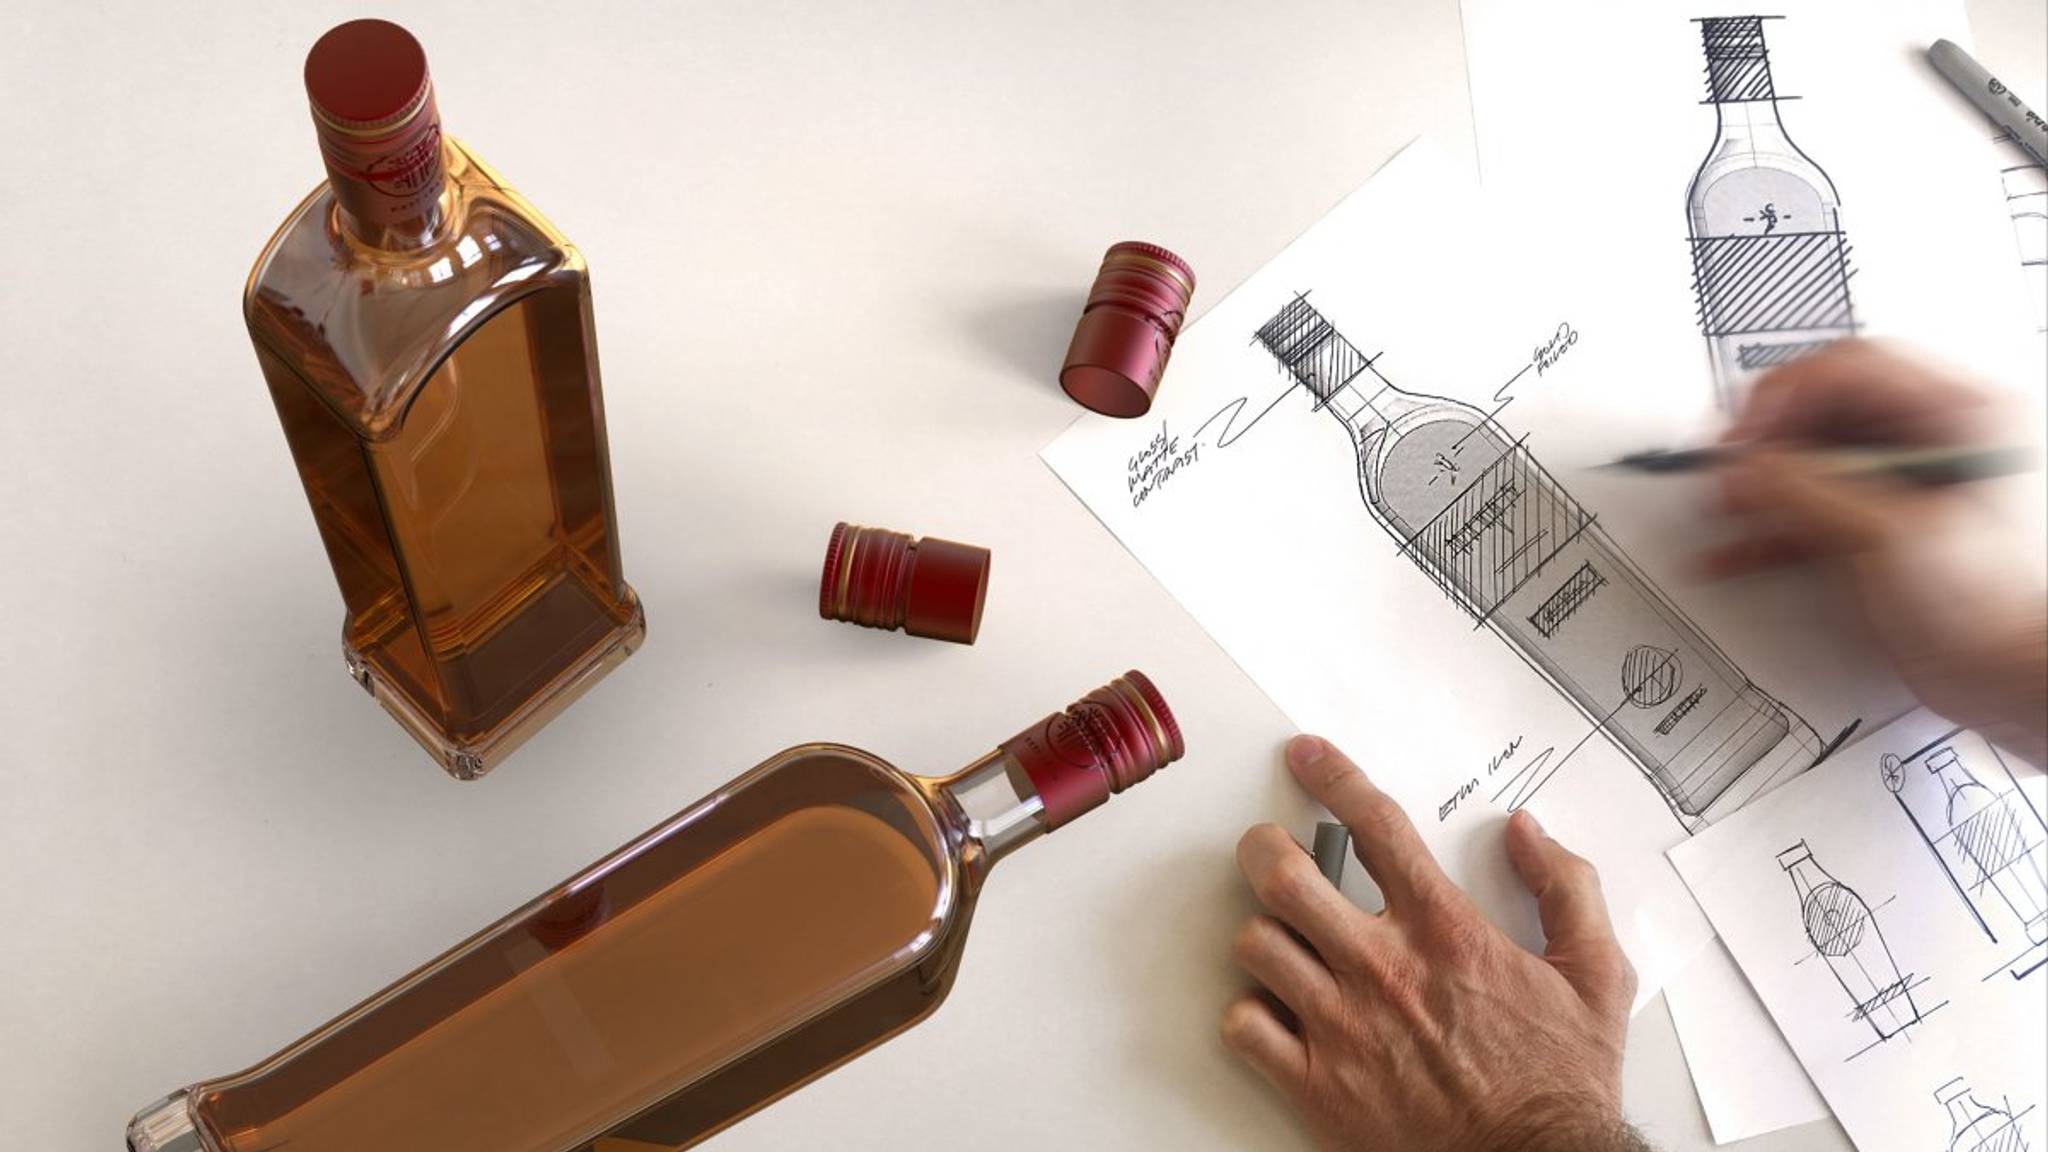 Johnnie Walker lets people personalise their whiskey